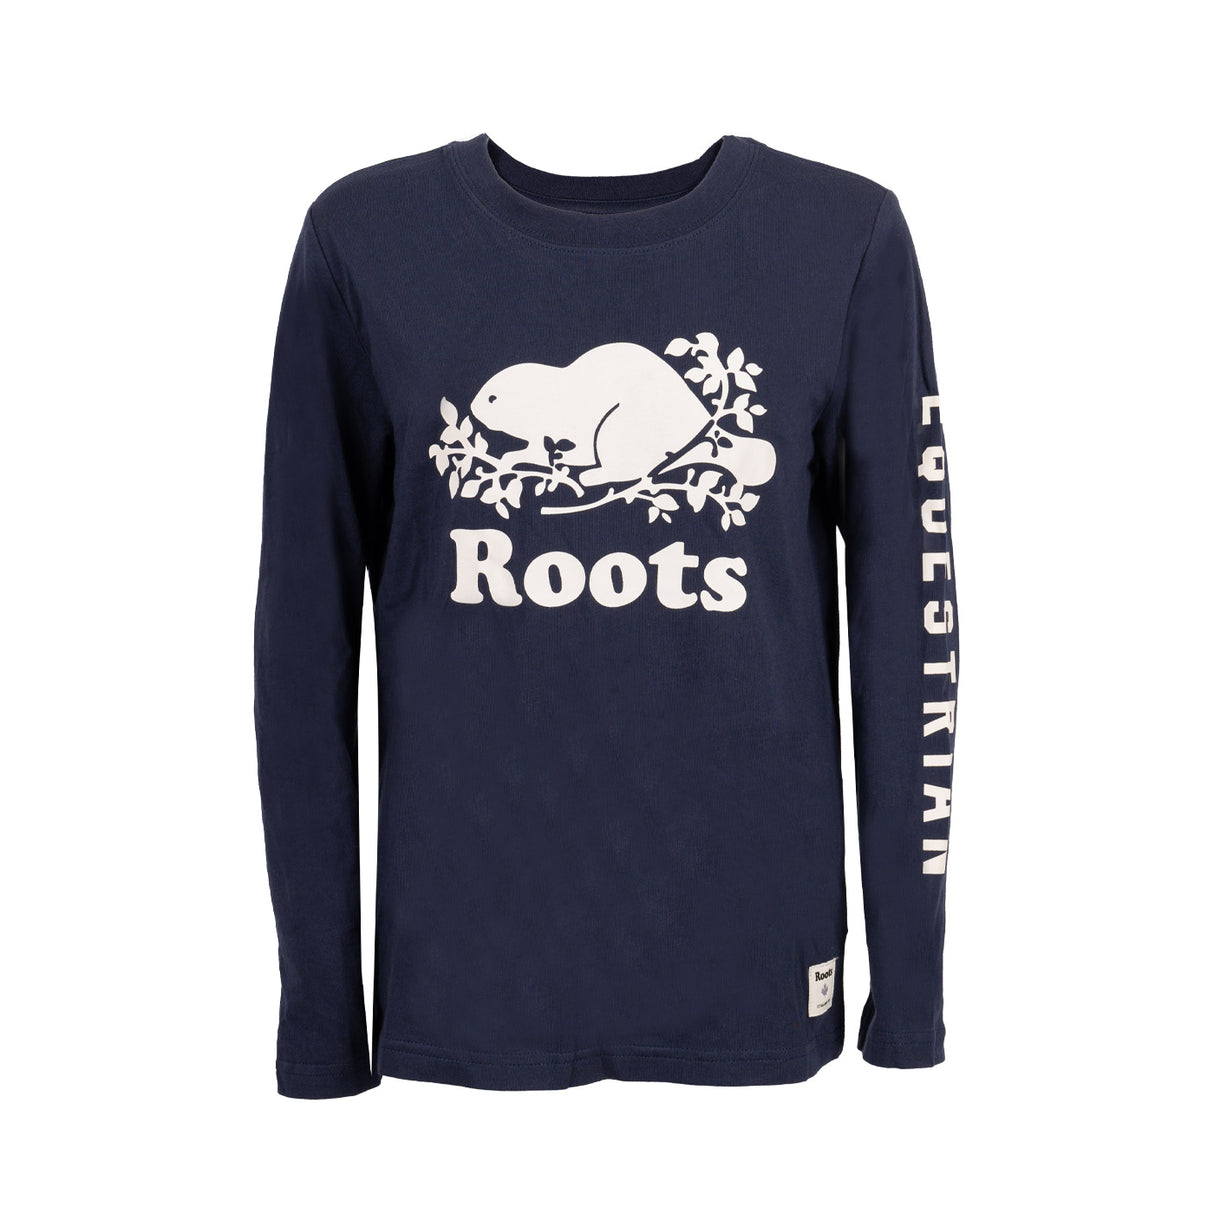 Roots Equestrian Original T-Shirt - Kids'